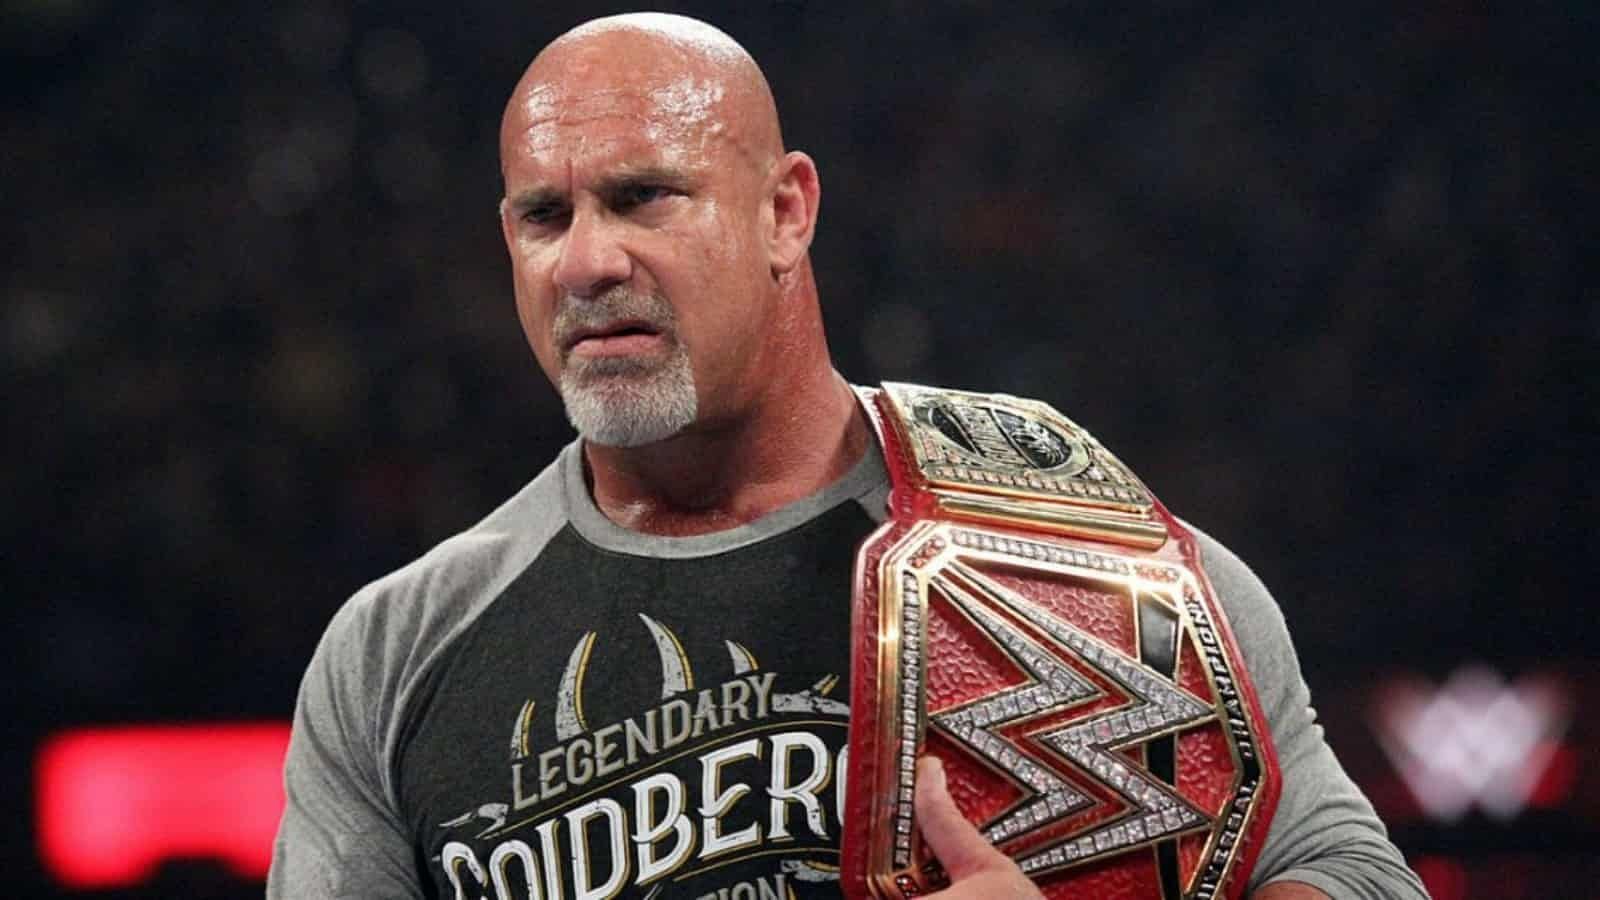 WWE Hall of Famer Goldberg is a multi-time world champion